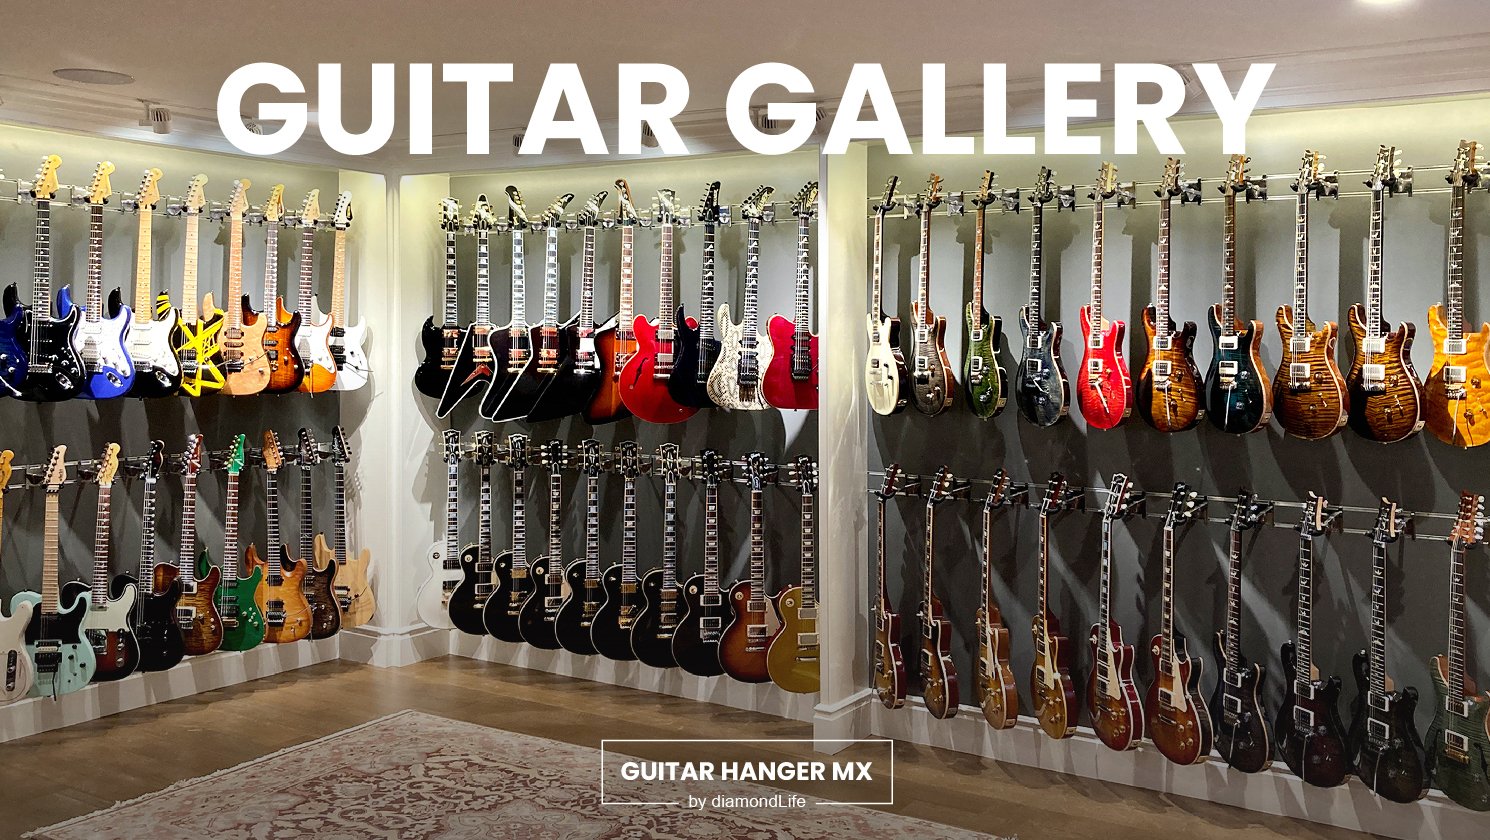 Many guitar hangers used in room full of guitars